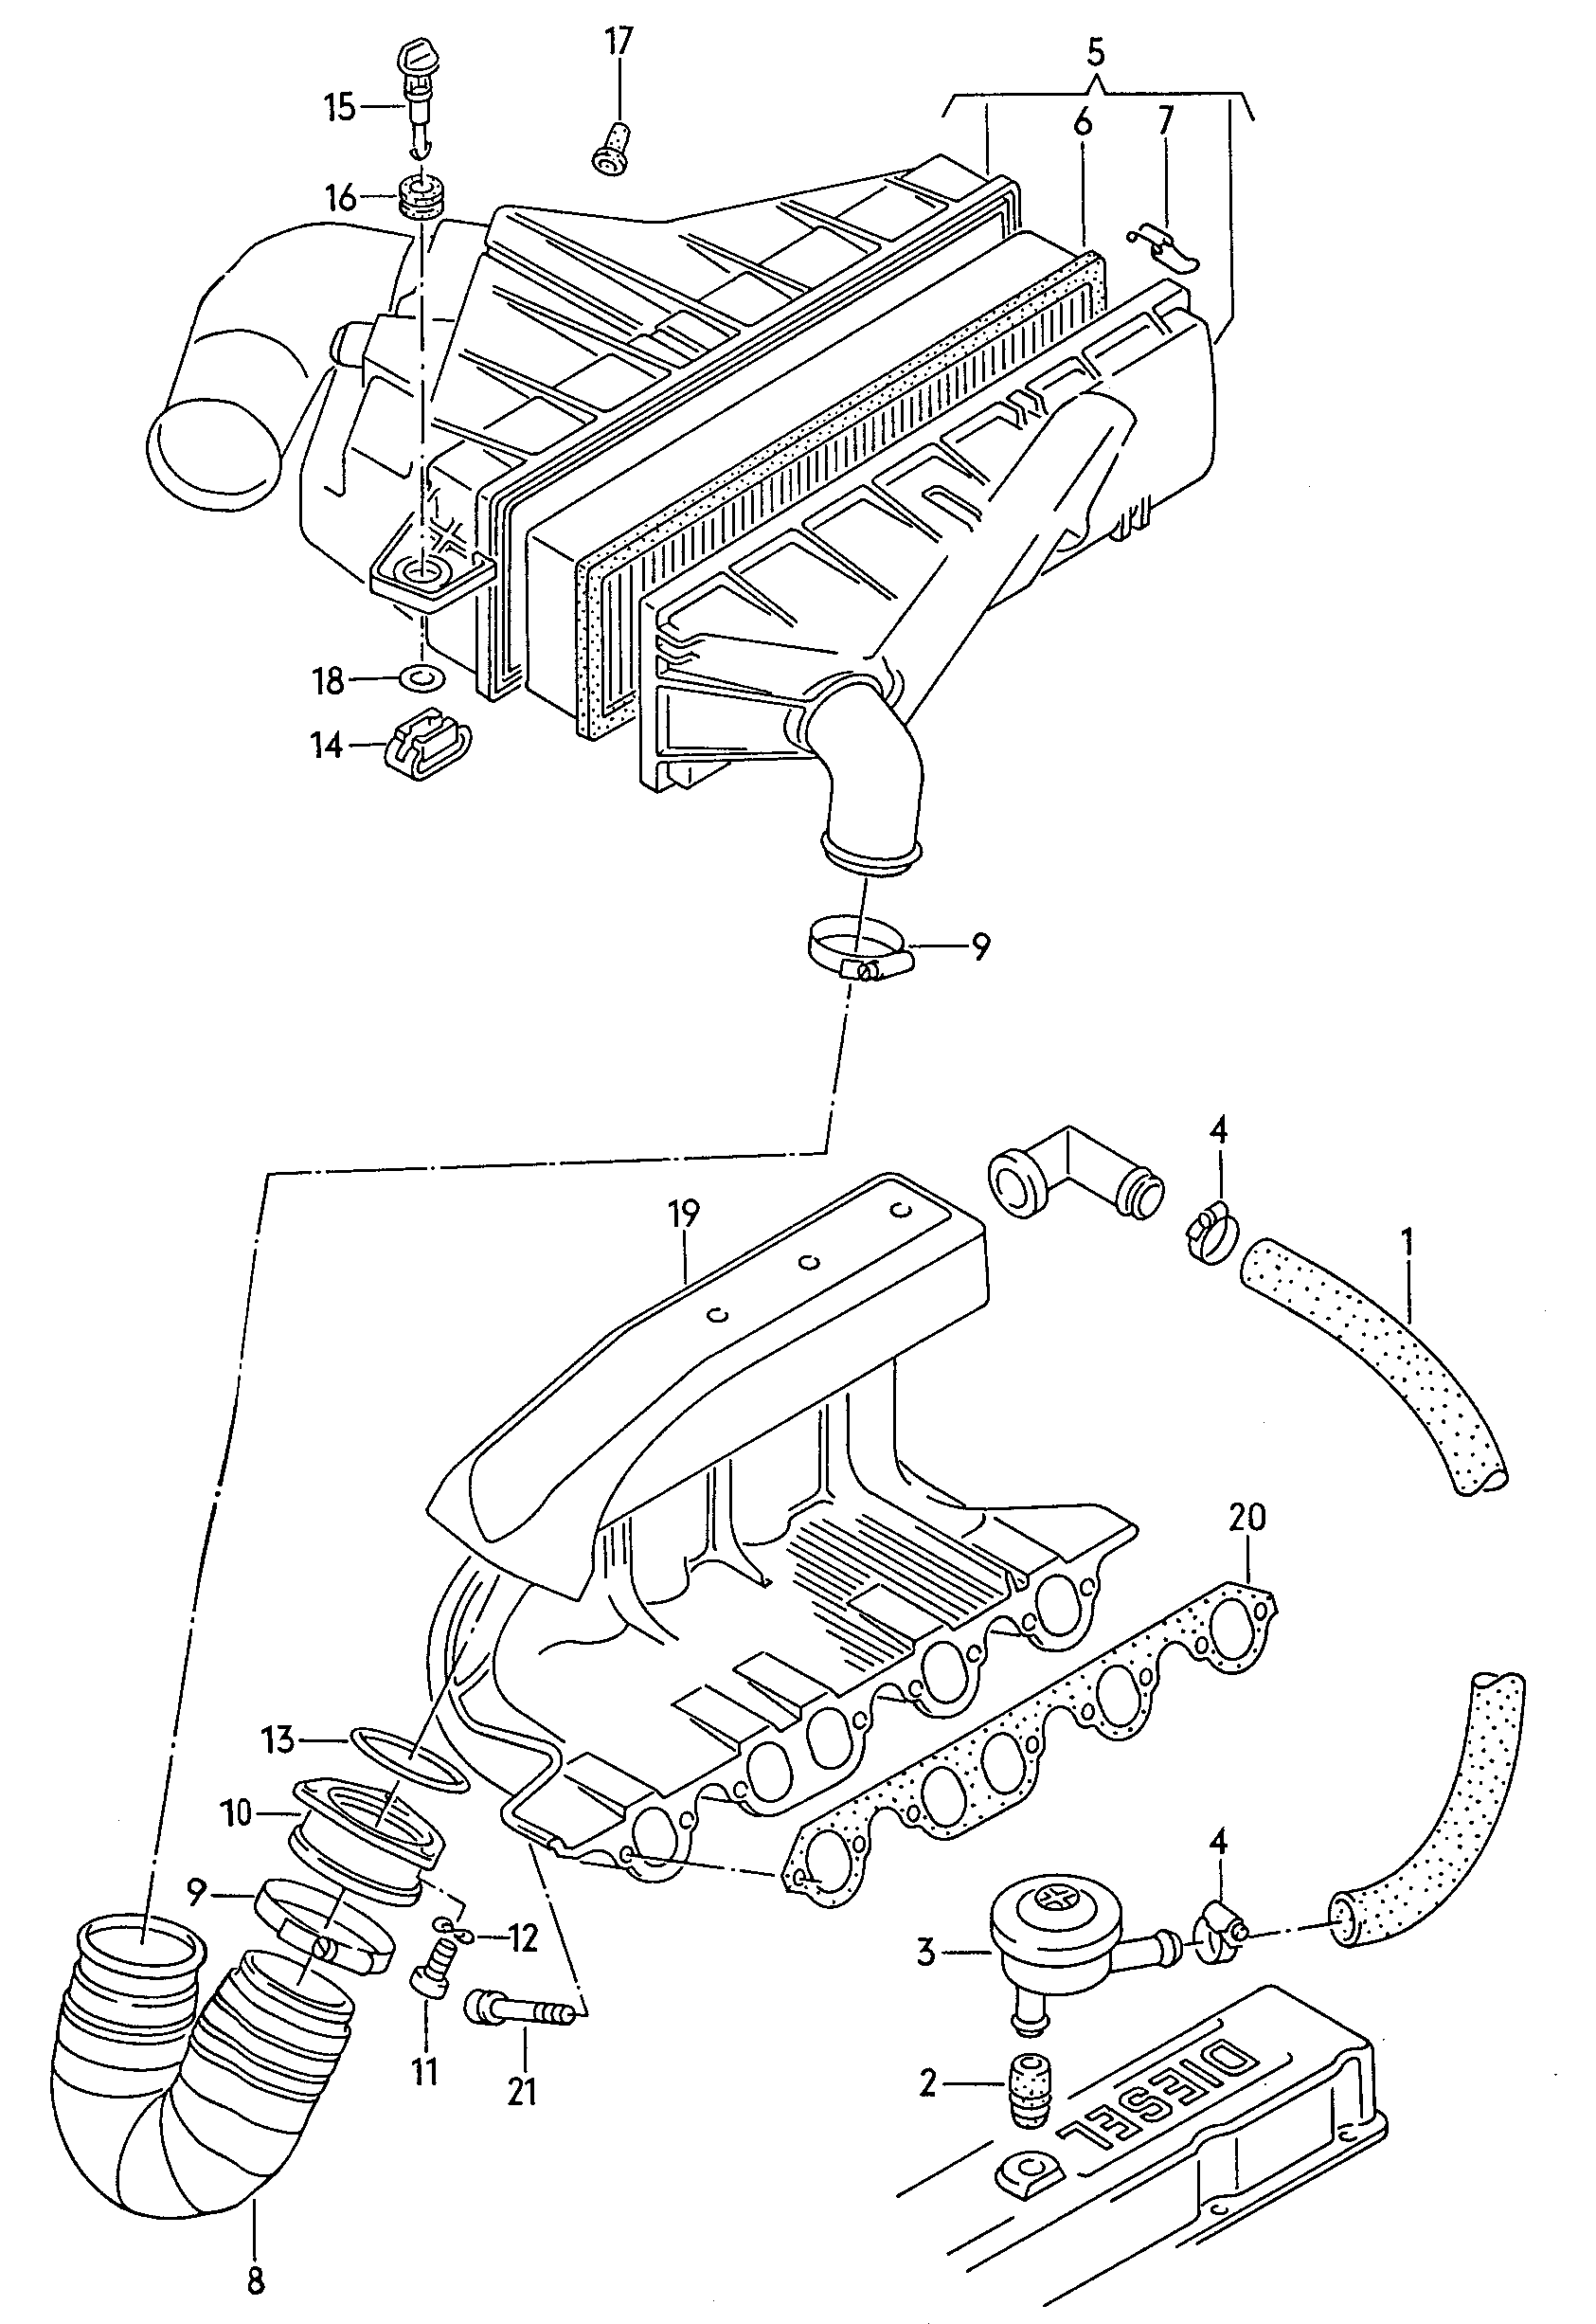 Air filterPressure regulating valveIntake connection 2.4ltr. - Audi 100 - a10